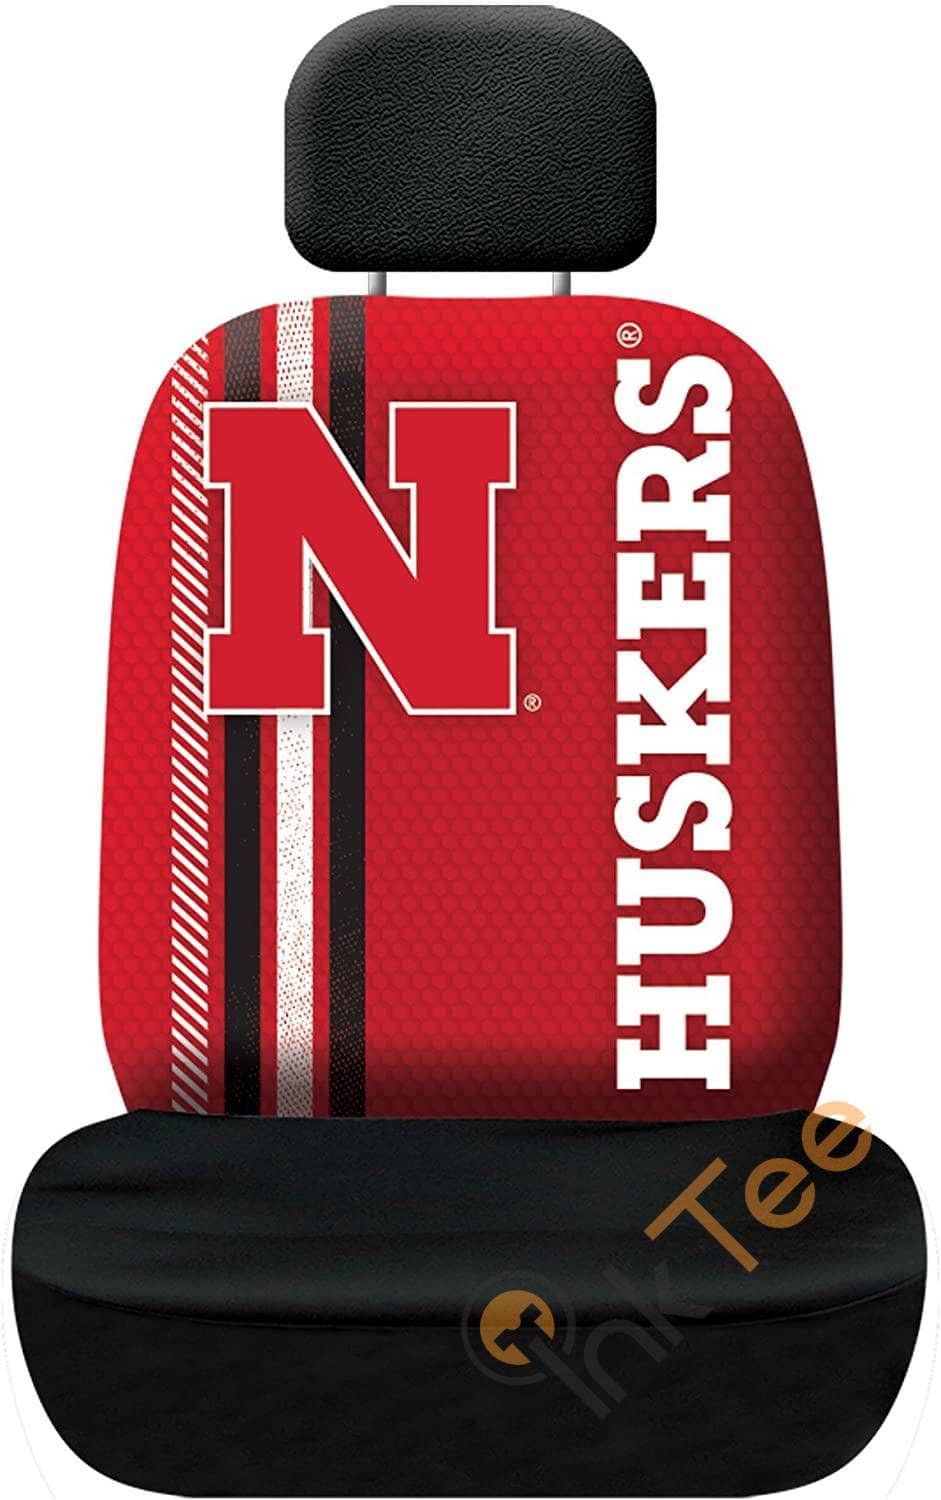 Ncaa Nebraska Cornhuskers Team Seat Cover